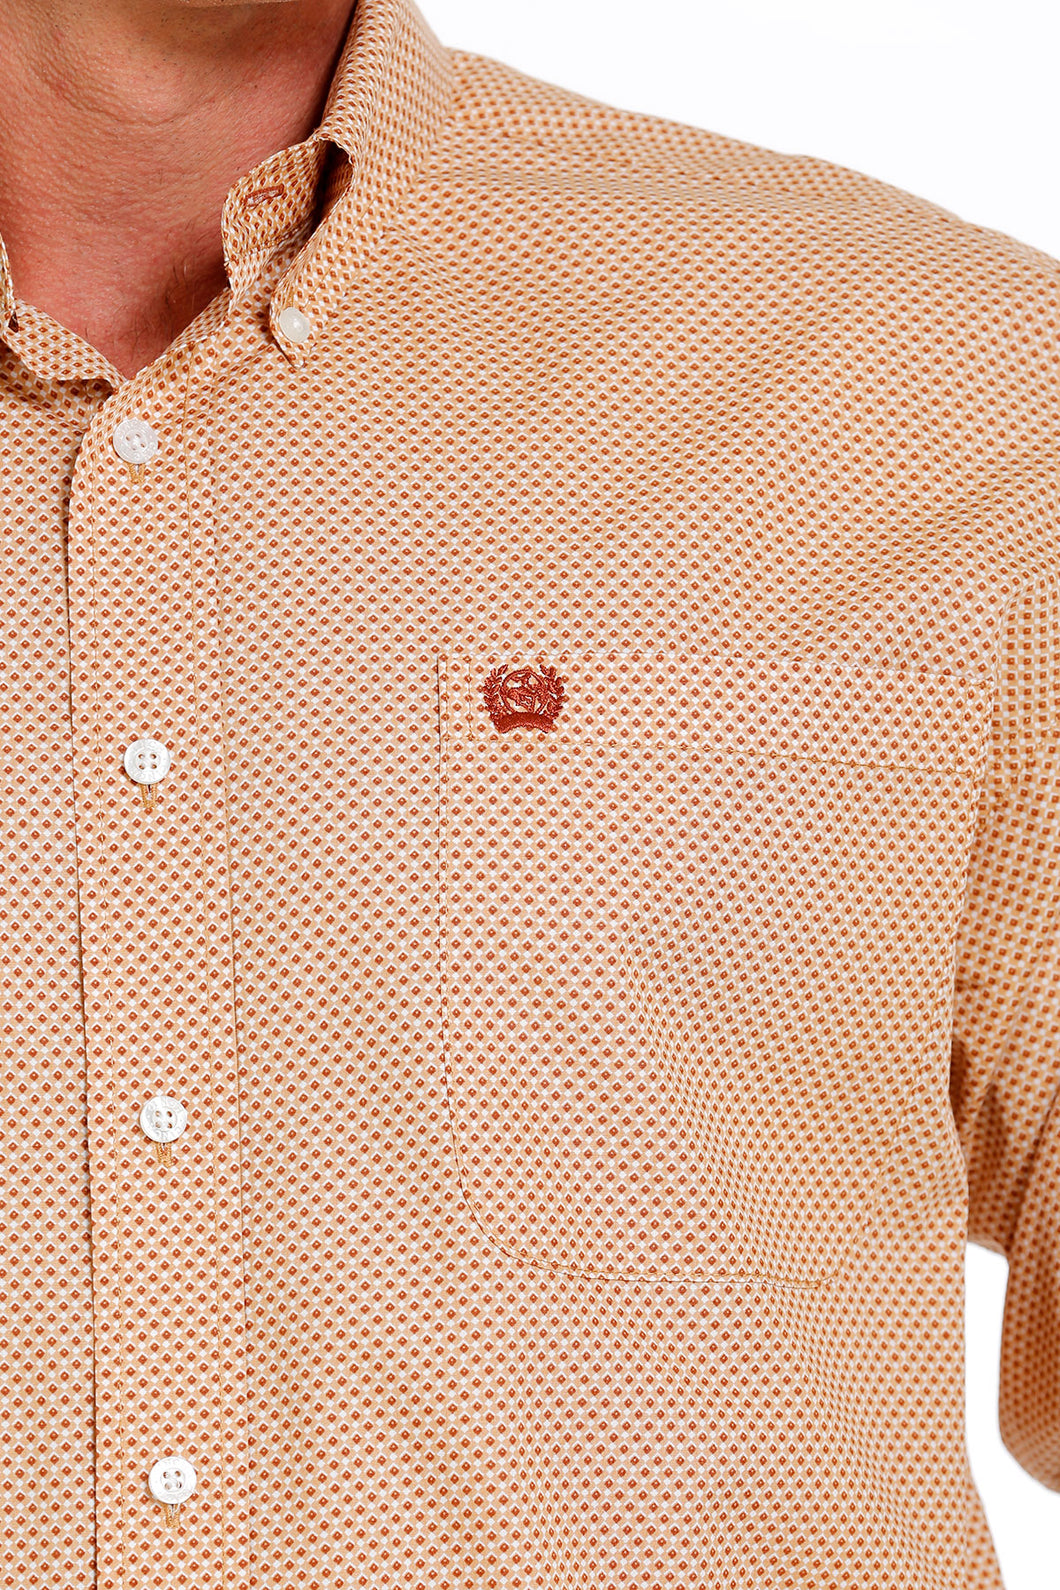 Cinch Button Down Shirt - MTW1105614